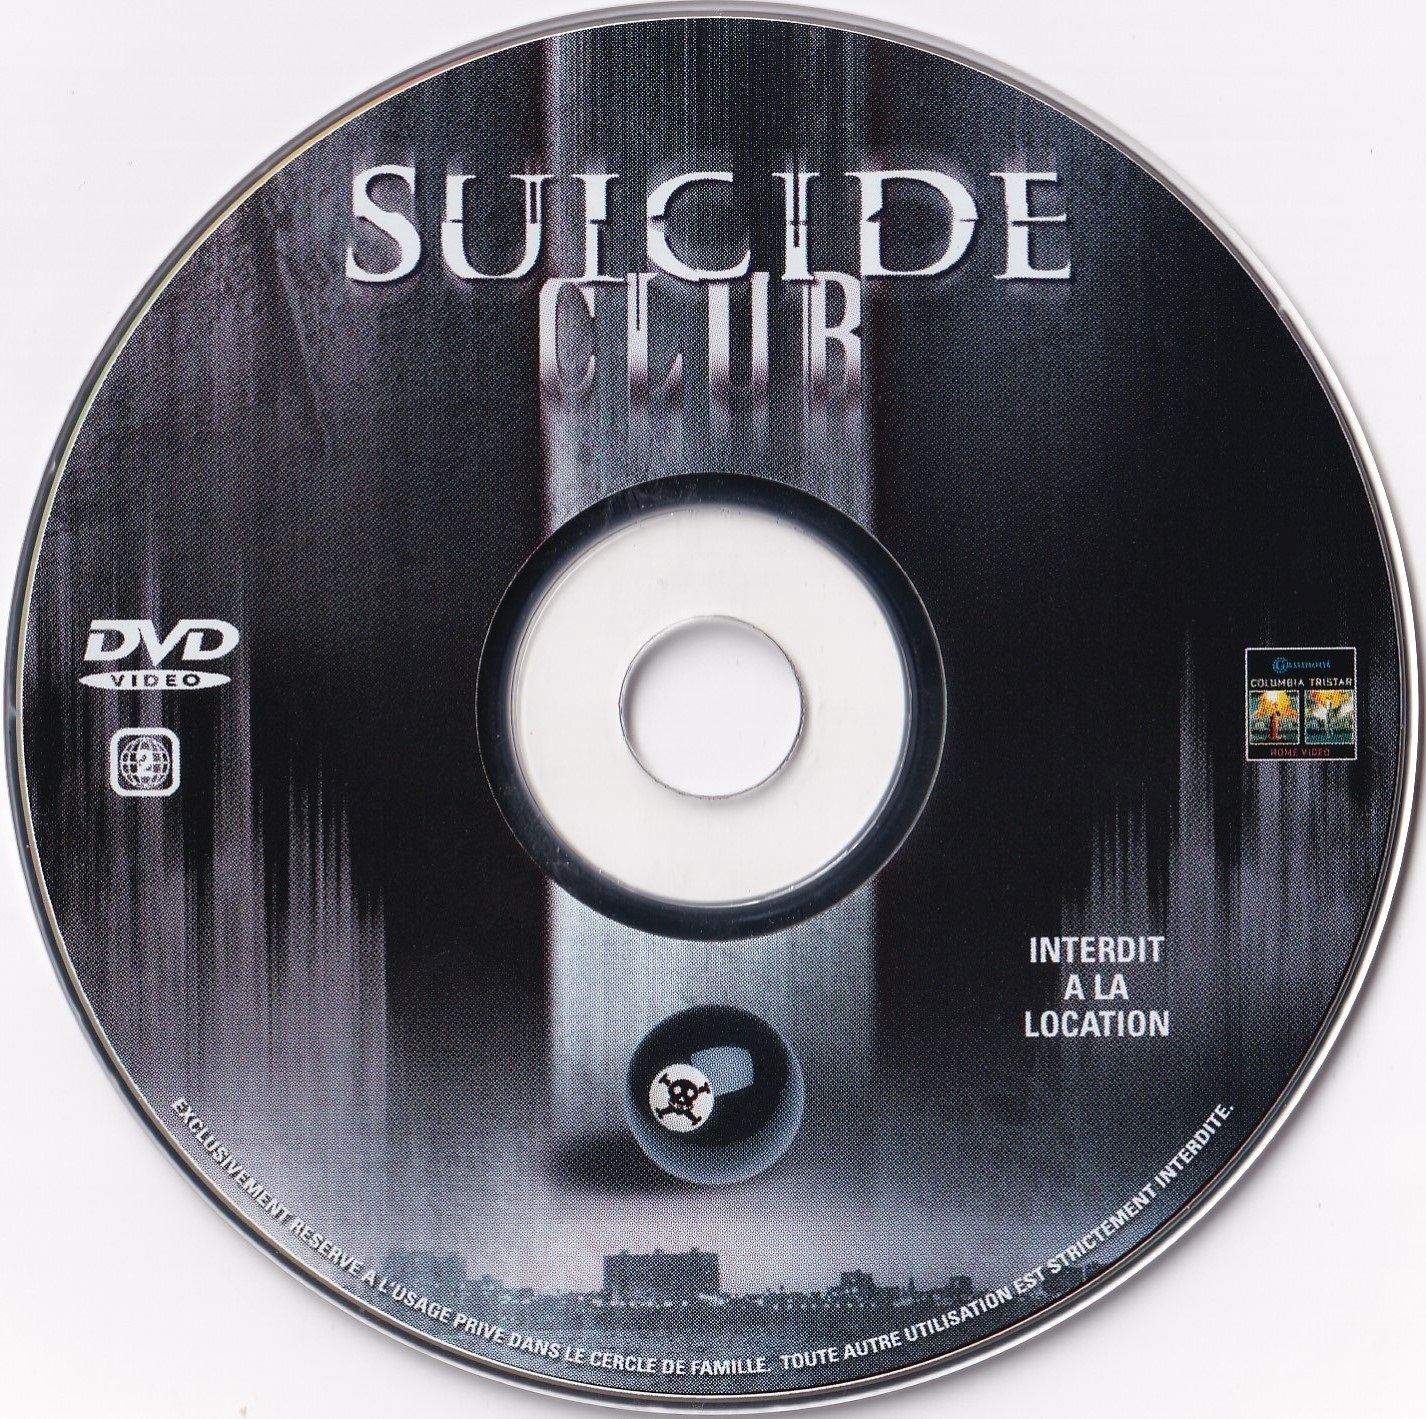 Suicide Club (1997)